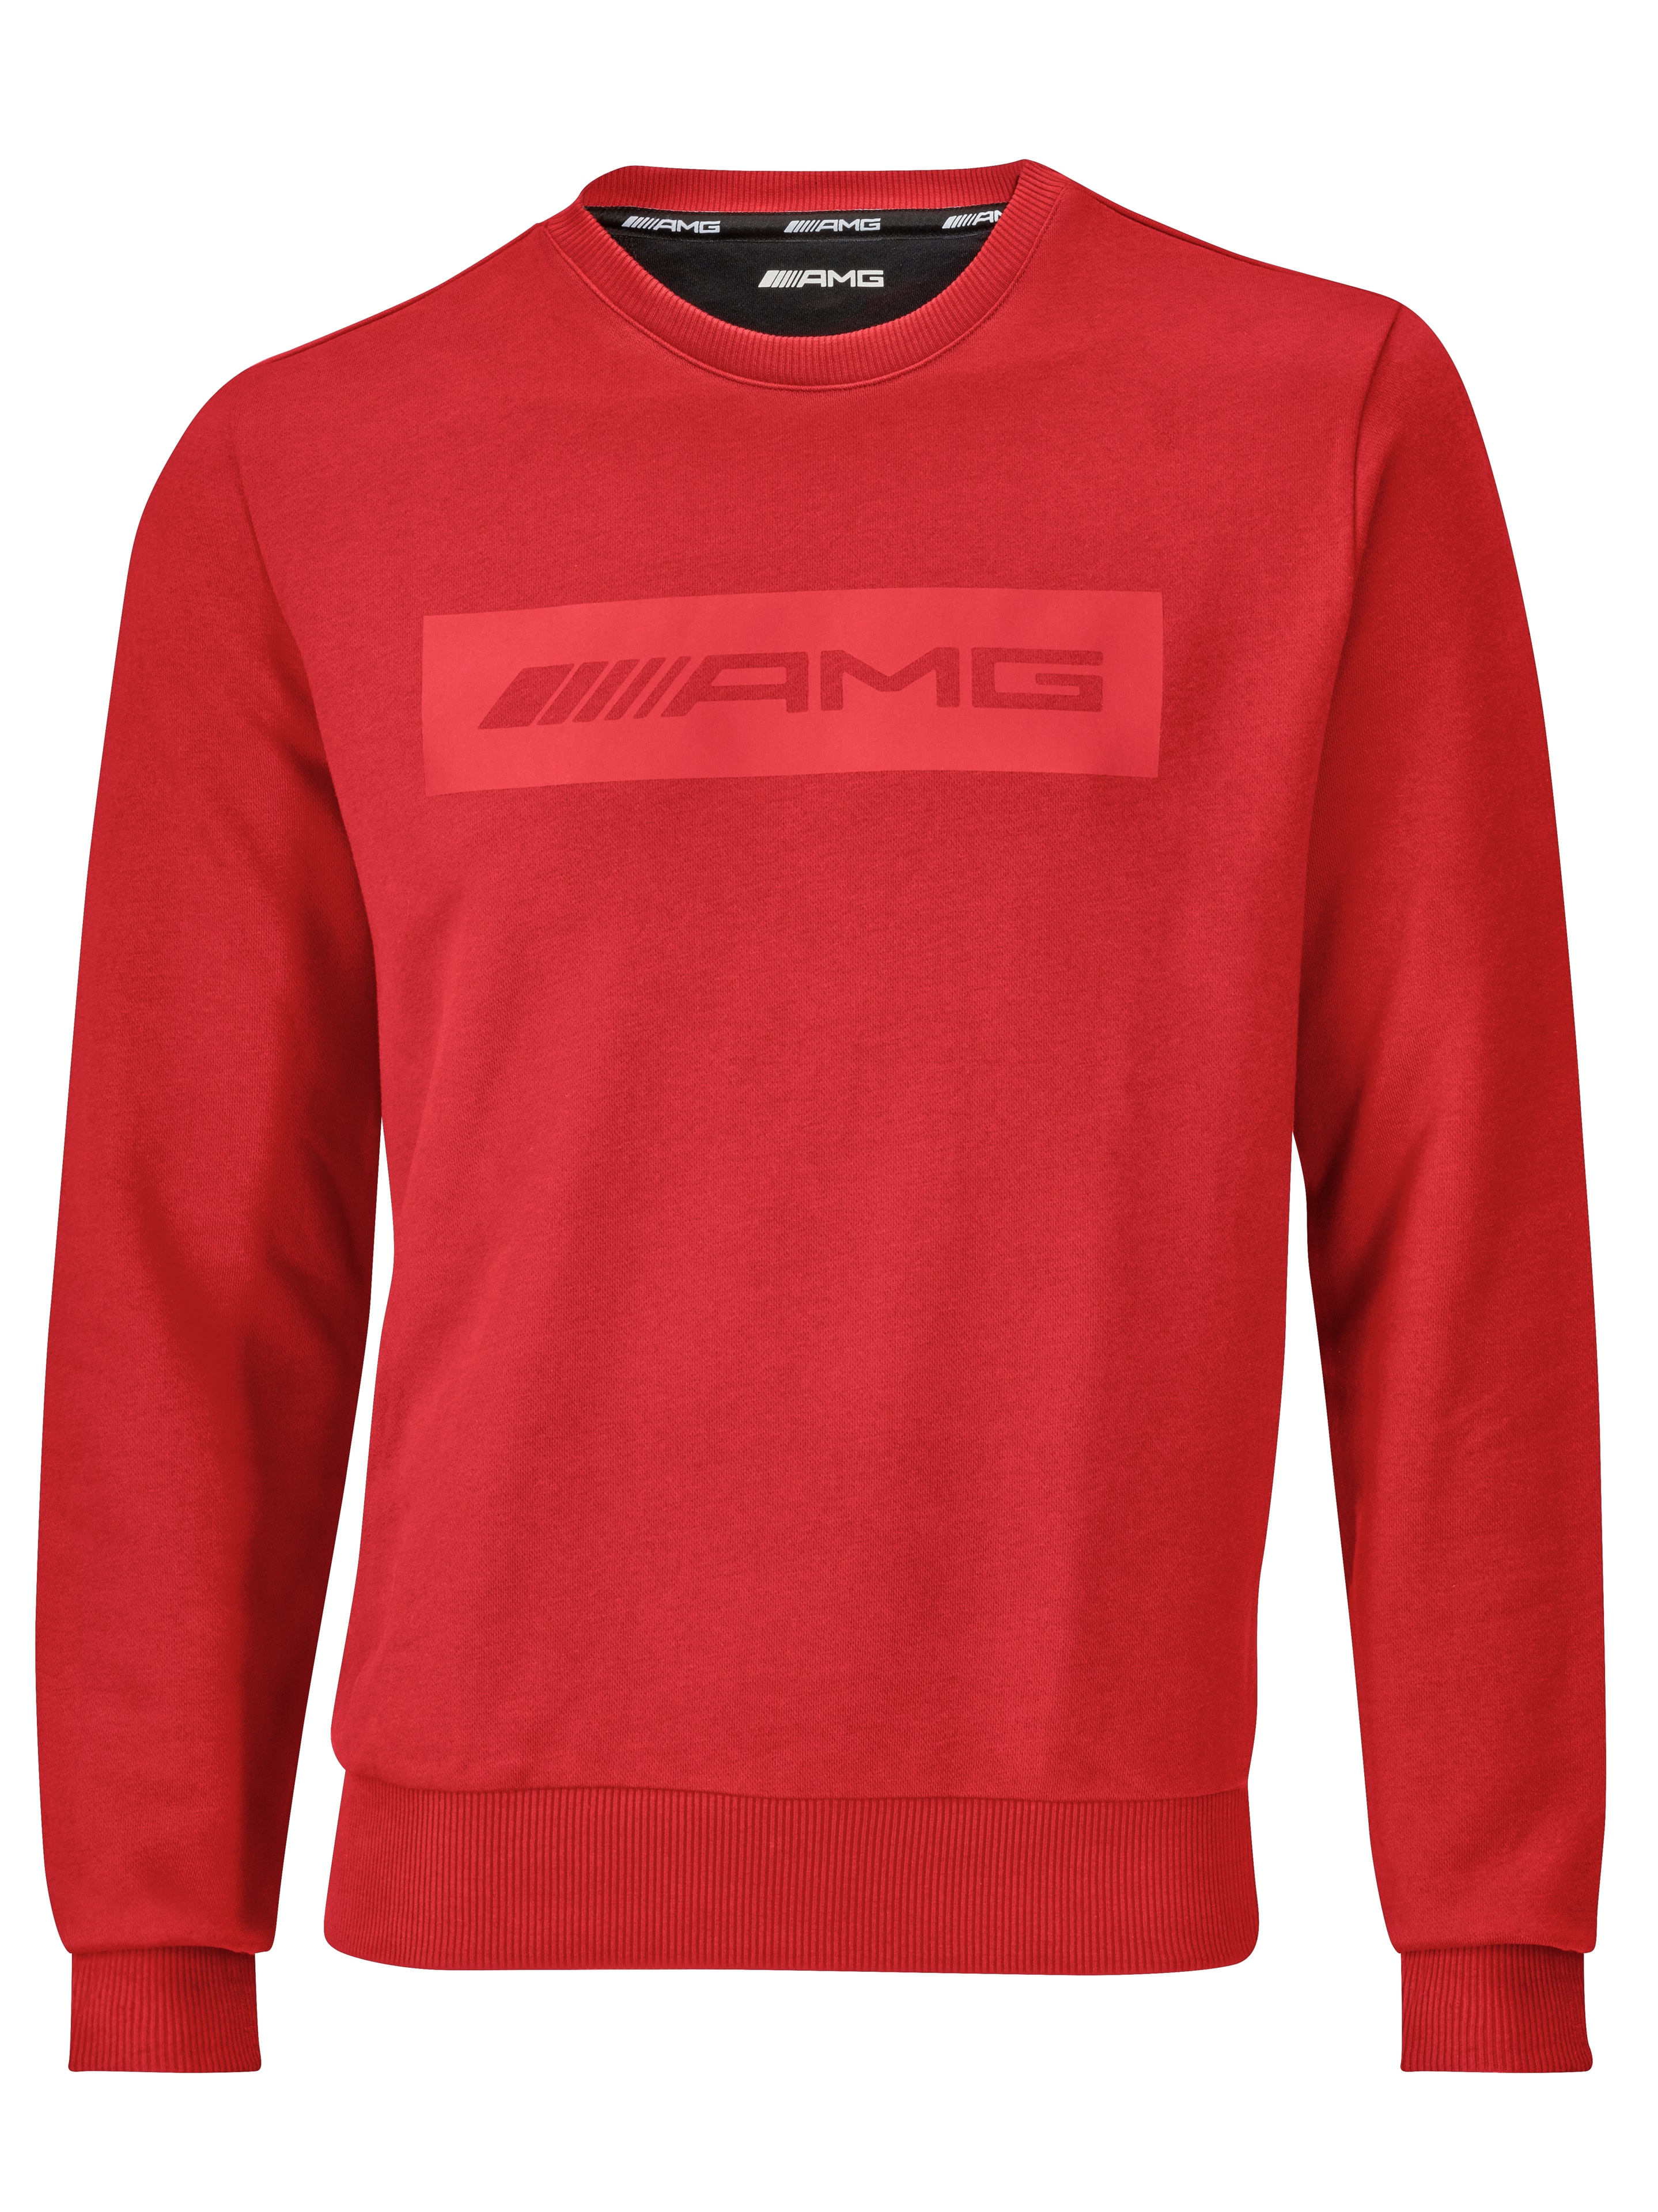 AMG Sweatshirt, Unisex - rot, XXXL